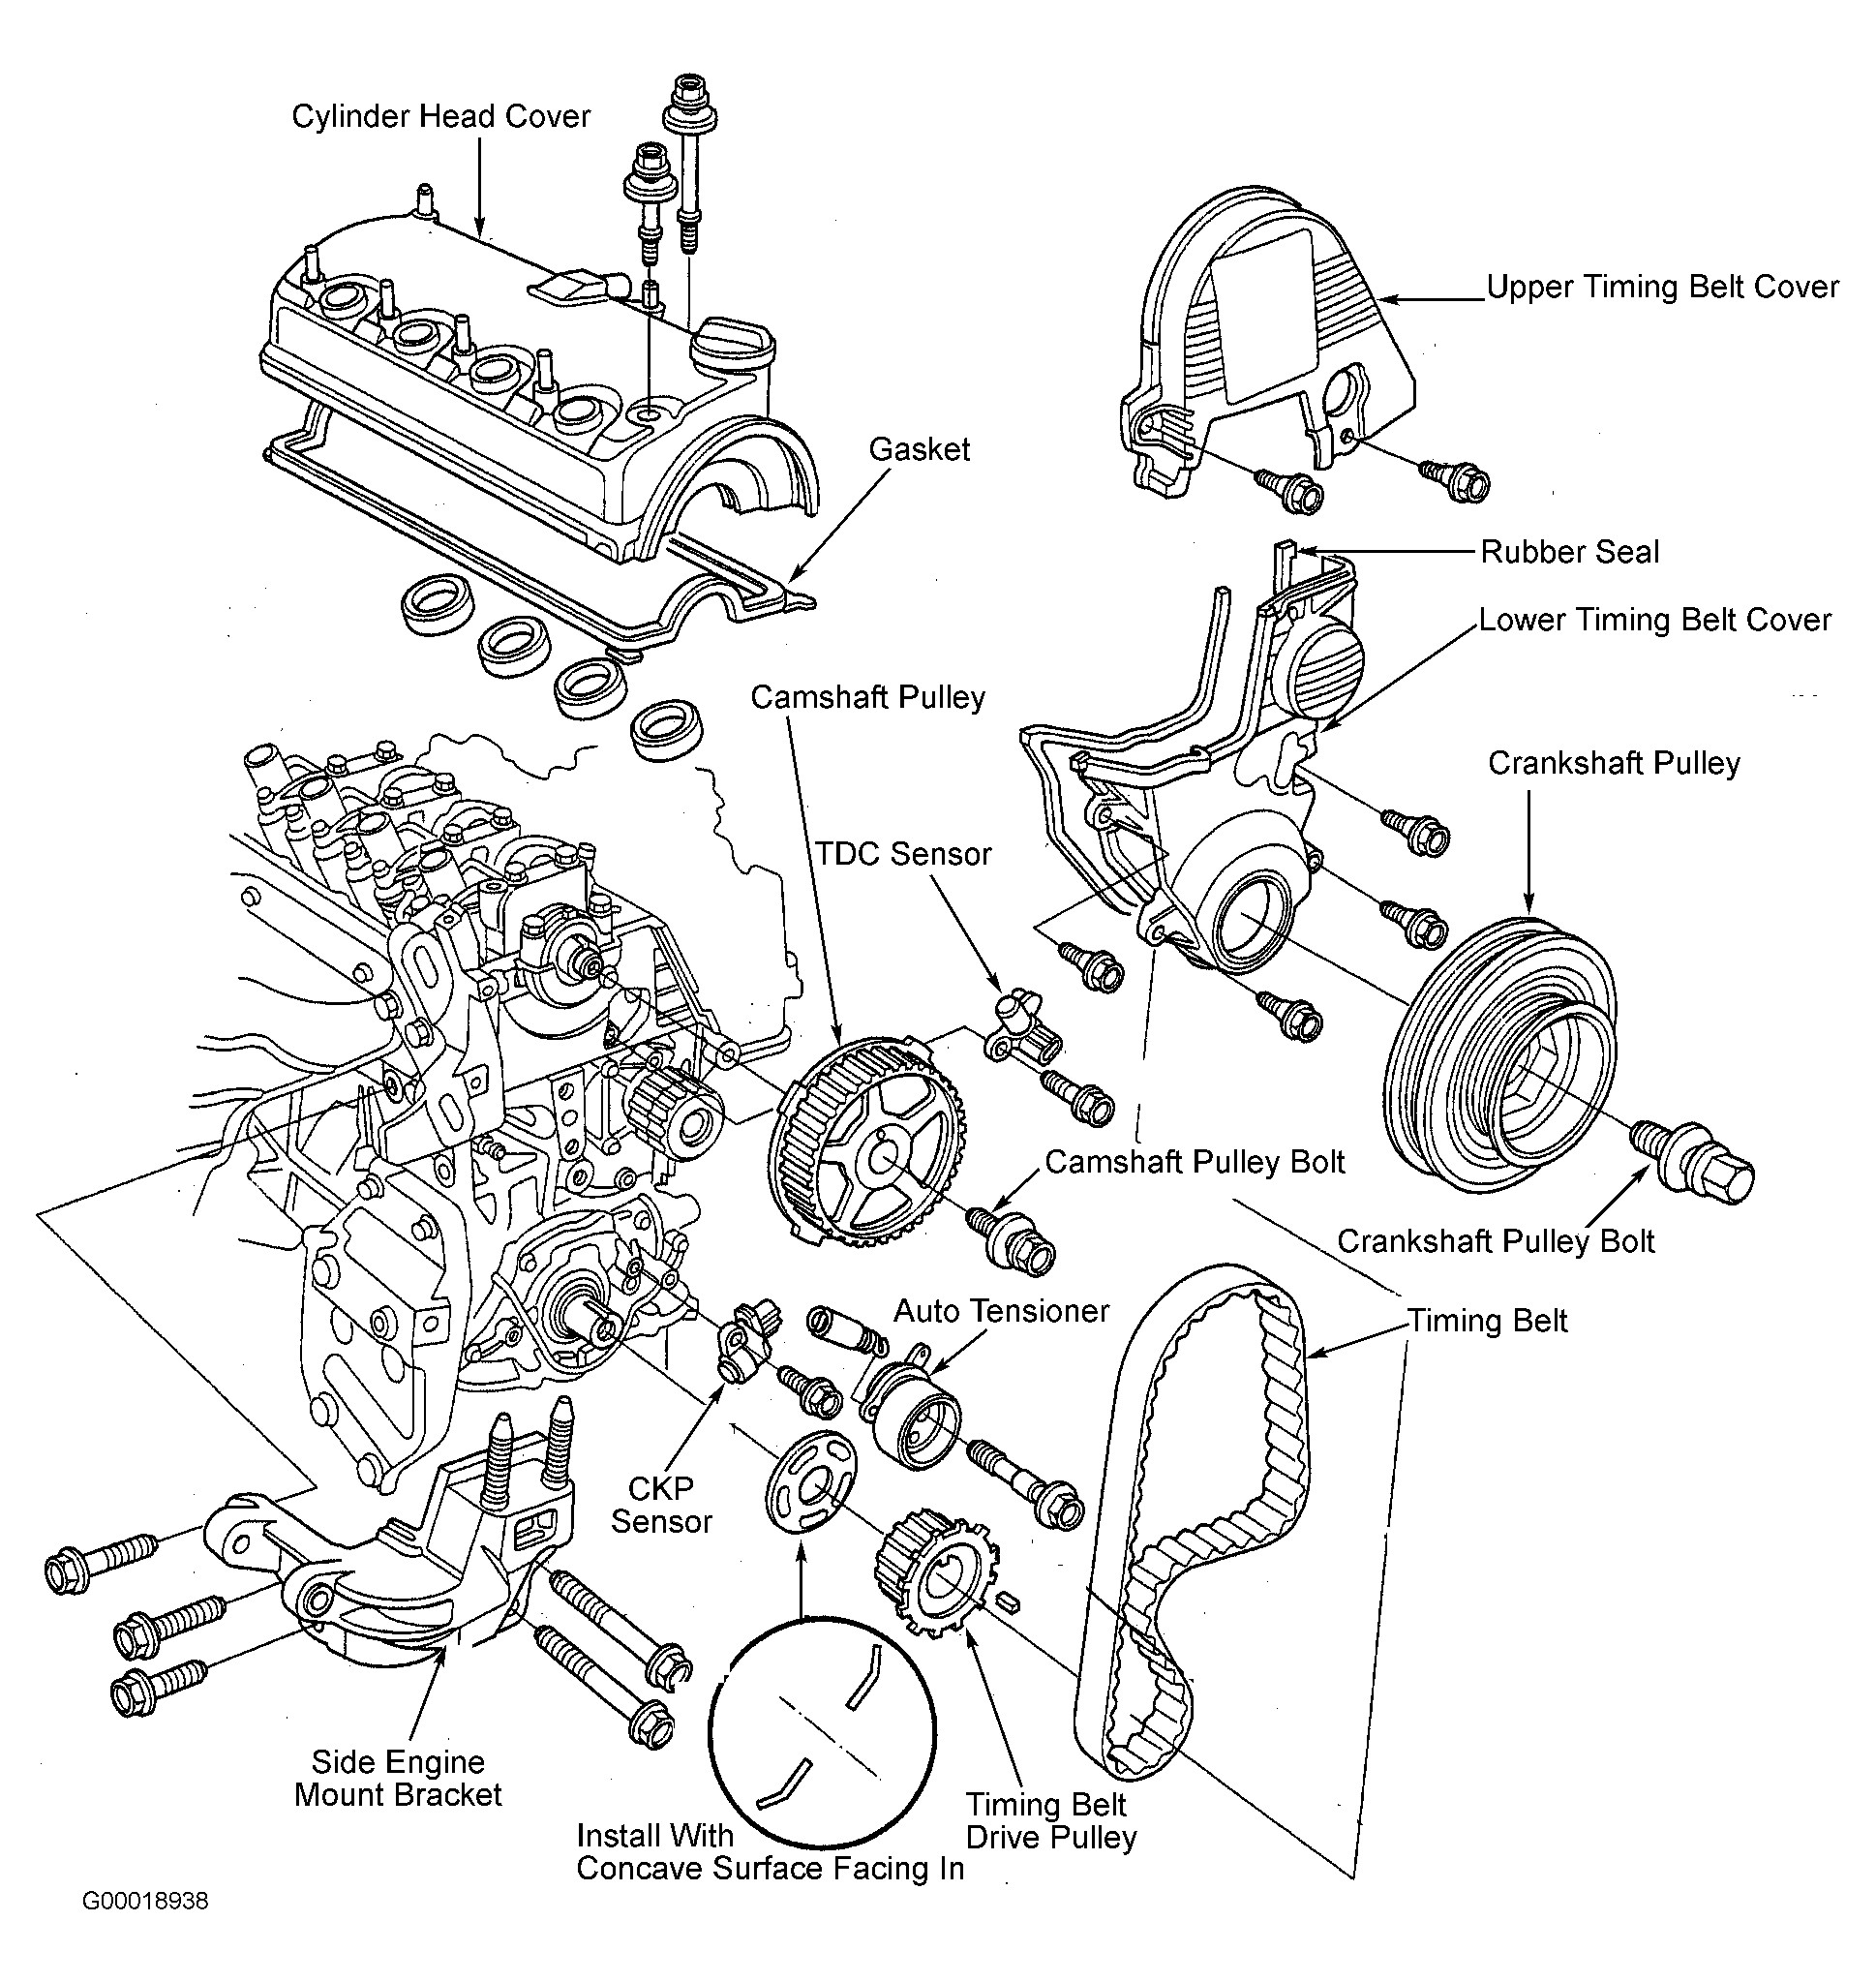 Engine Timing Diagram Honda Civic Parts Diagram Wonderful Likeness Serpentine and Timing Of Engine Timing Diagram